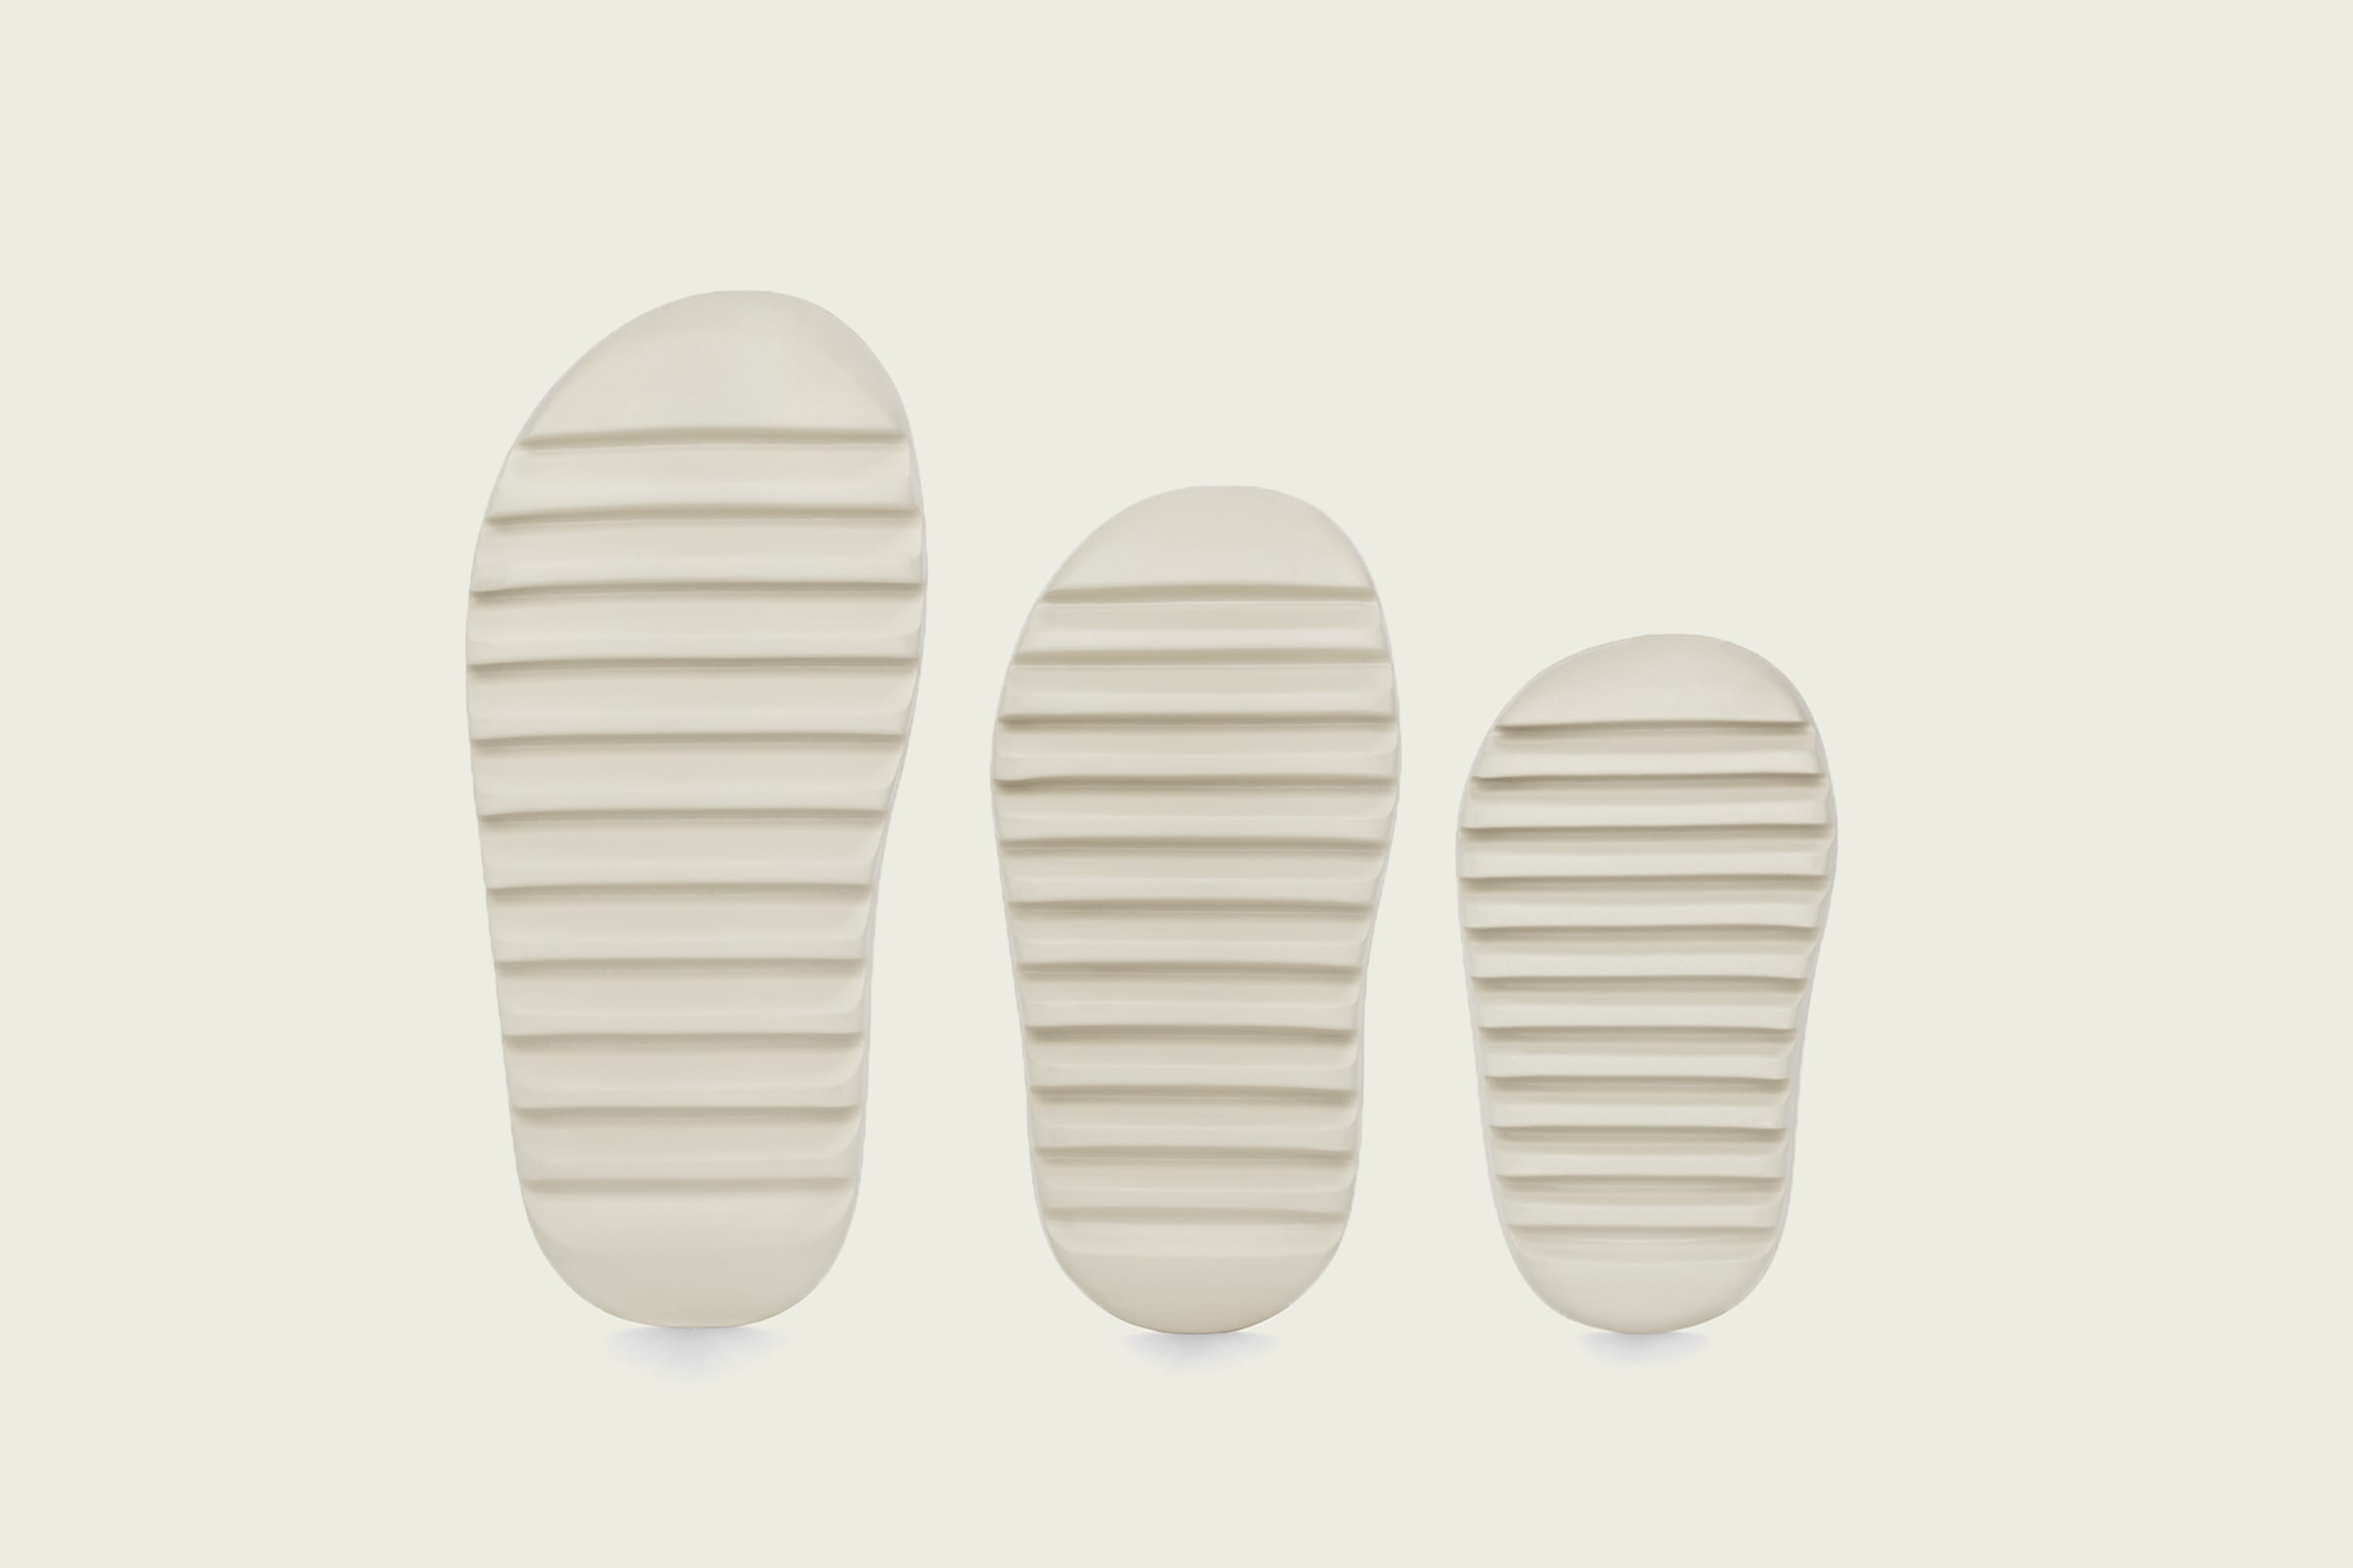 adidas Yeezy Slide Bone Novelship